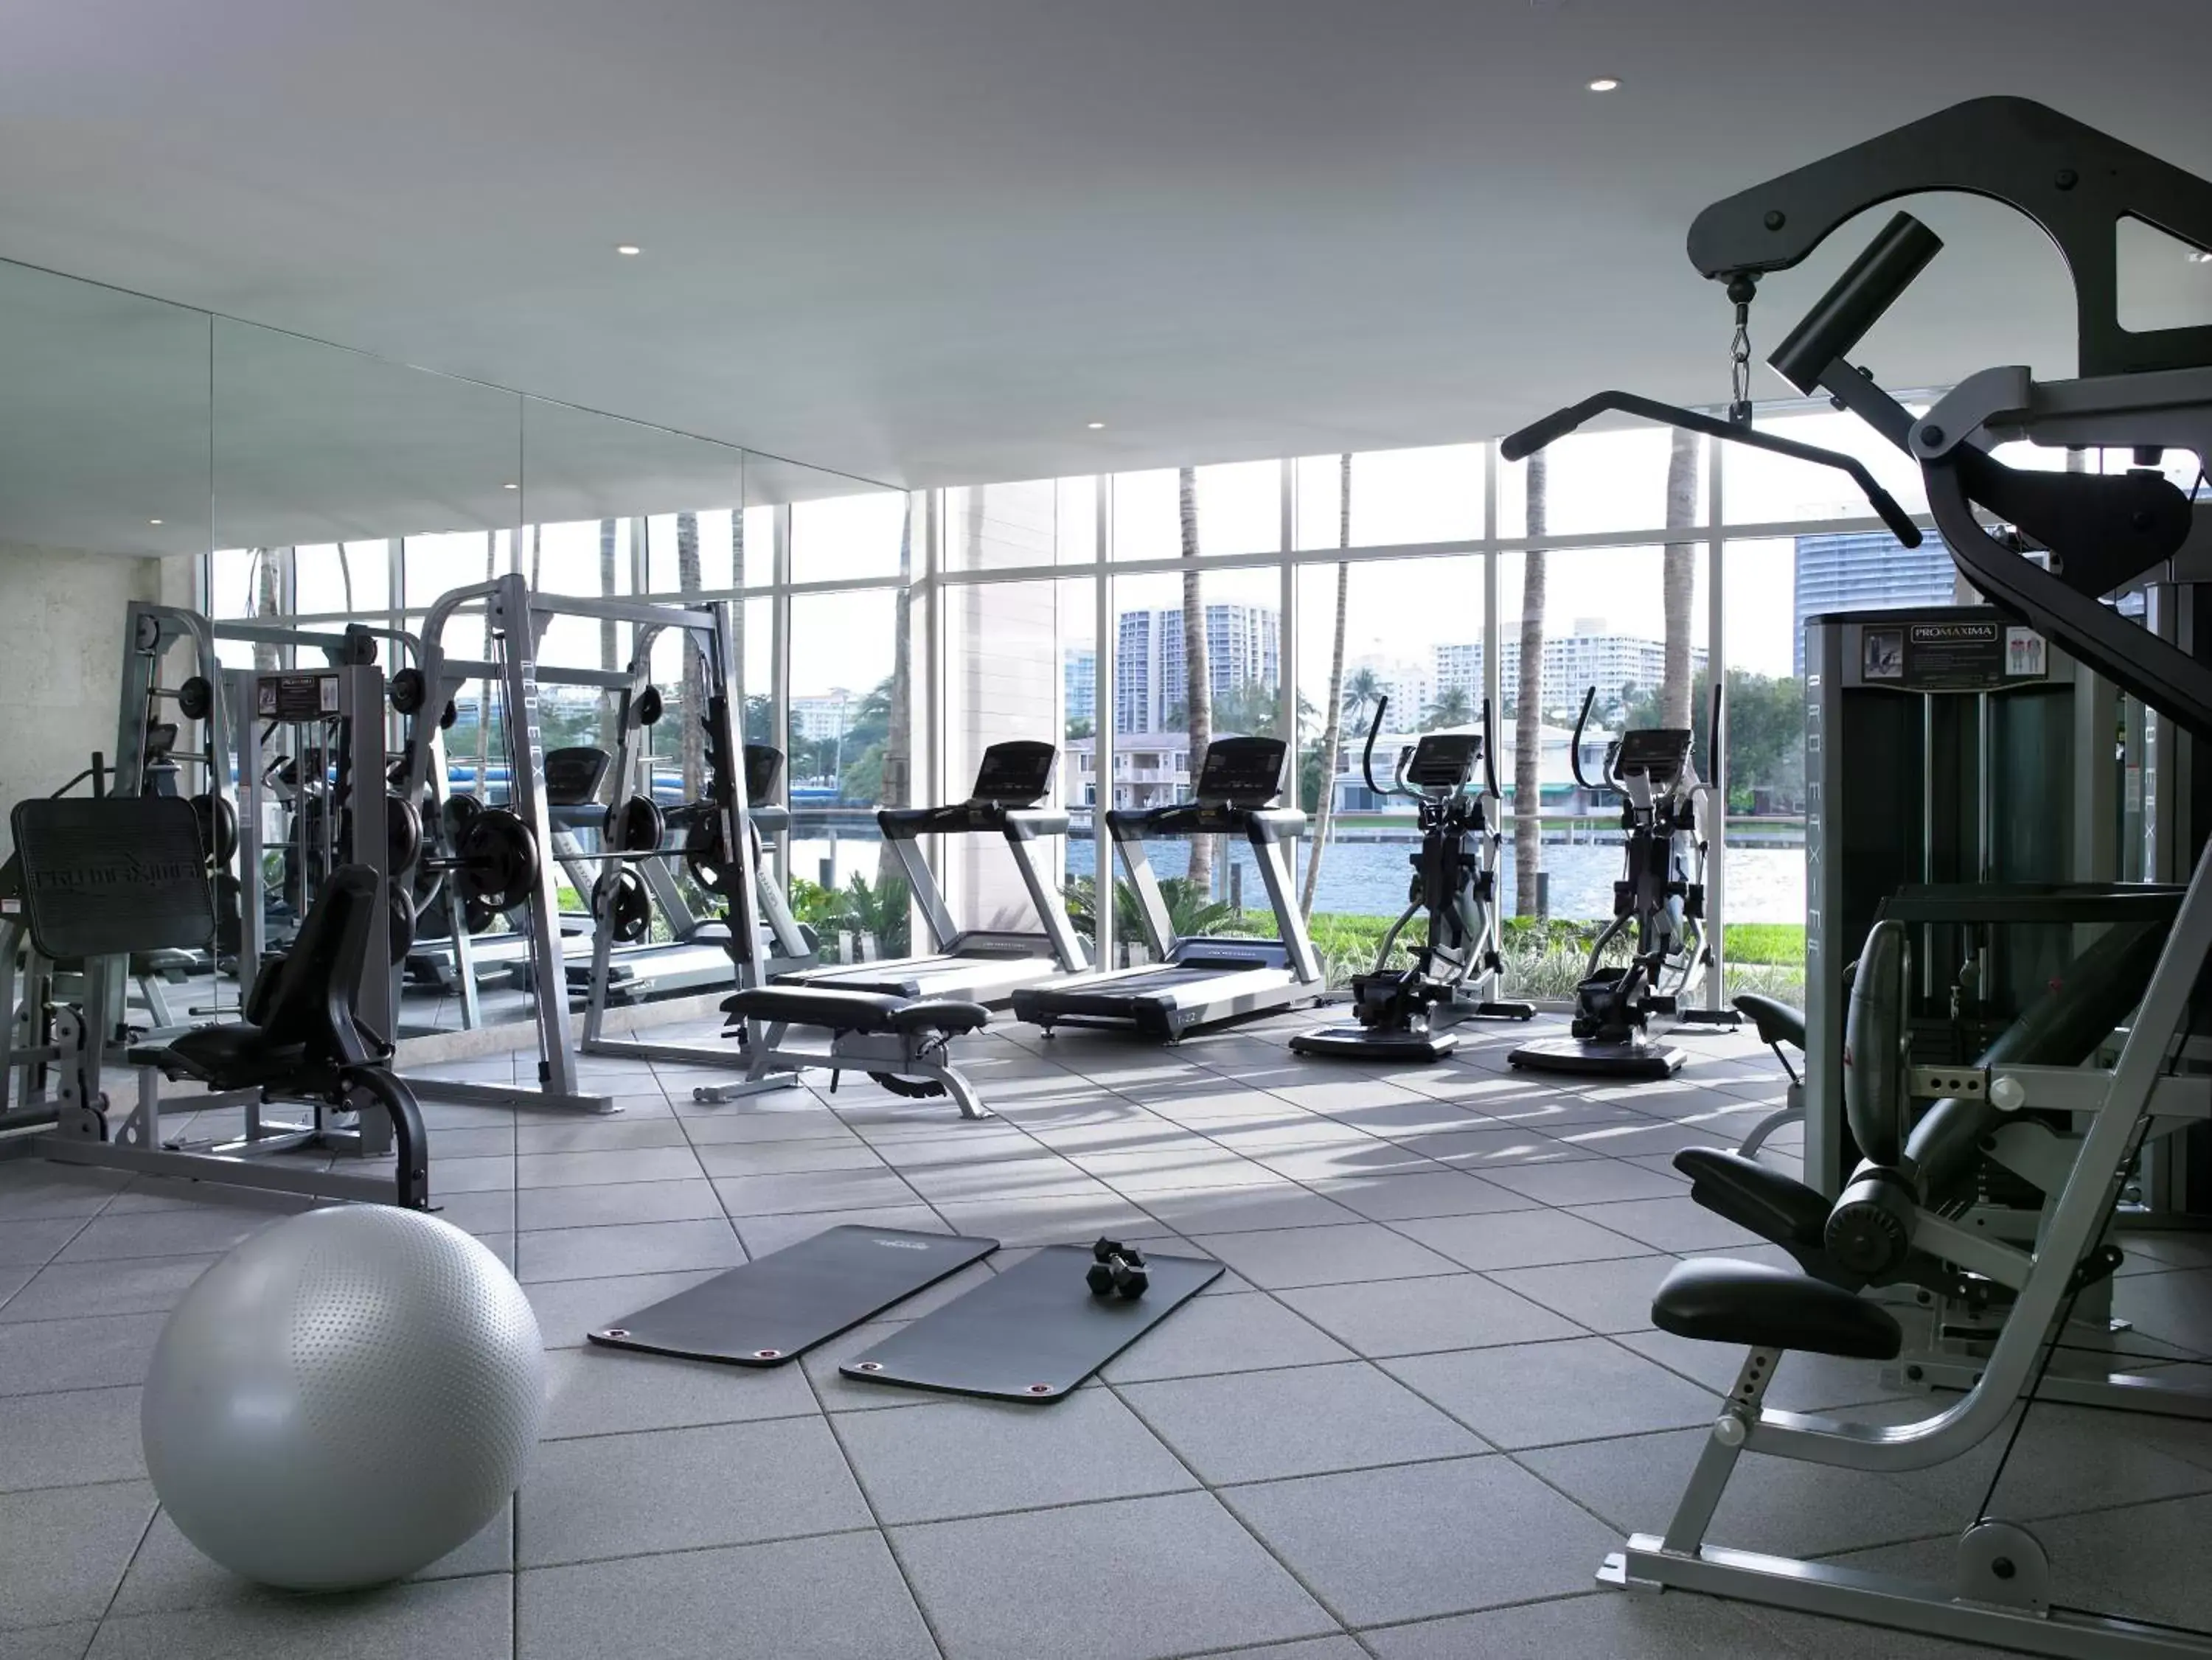 Fitness centre/facilities, Fitness Center/Facilities in Grand Beach Hotel Bay Harbor